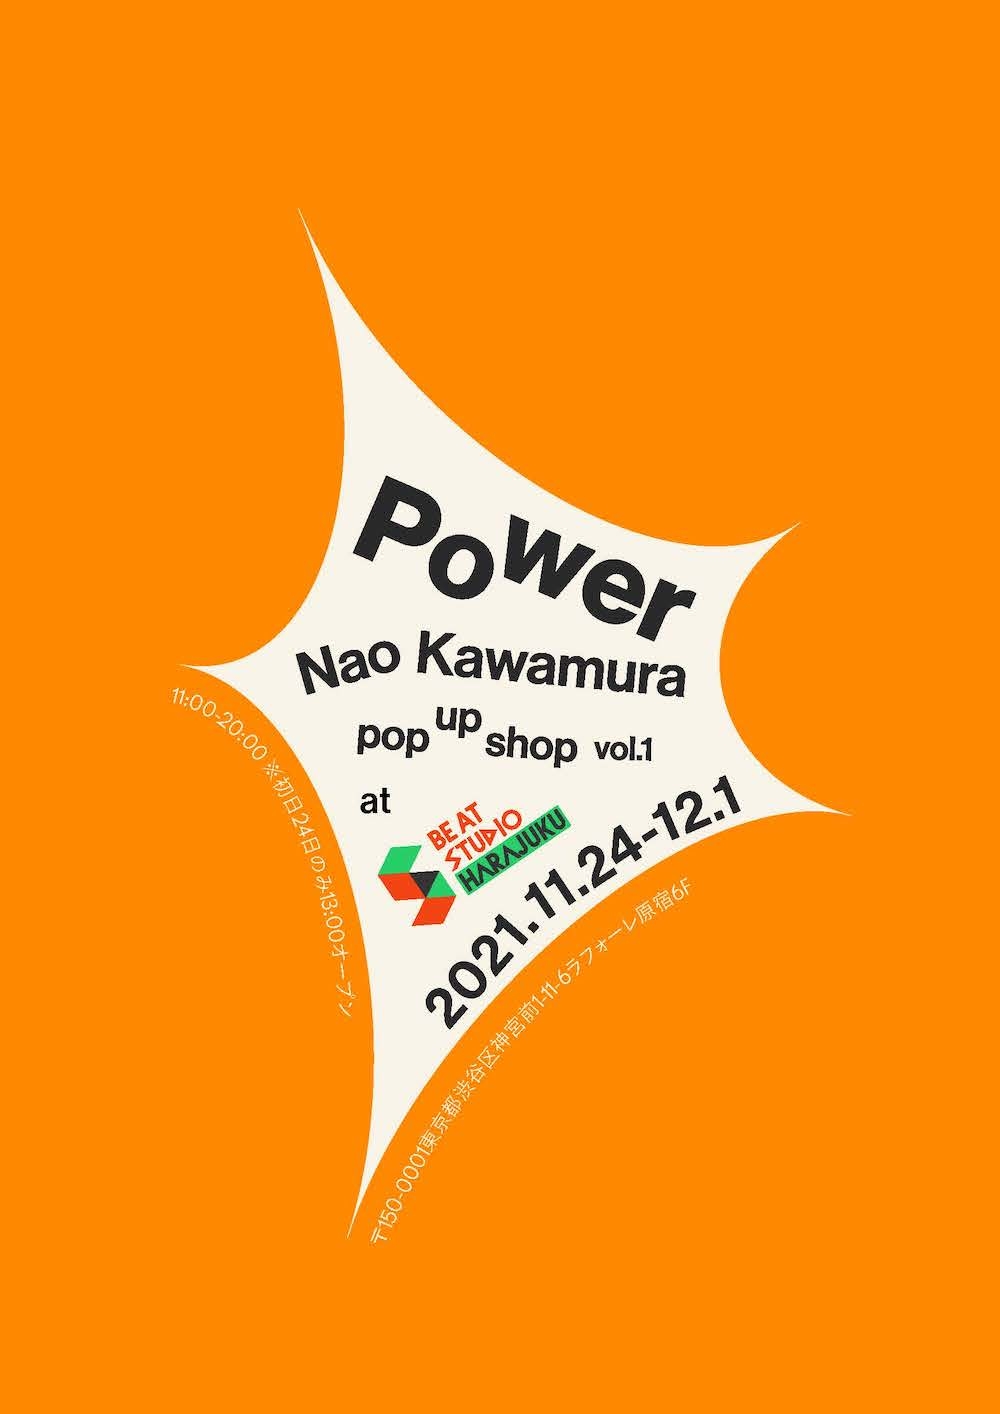 『Nao Kawamura pop up shop vol.1 “Power”』